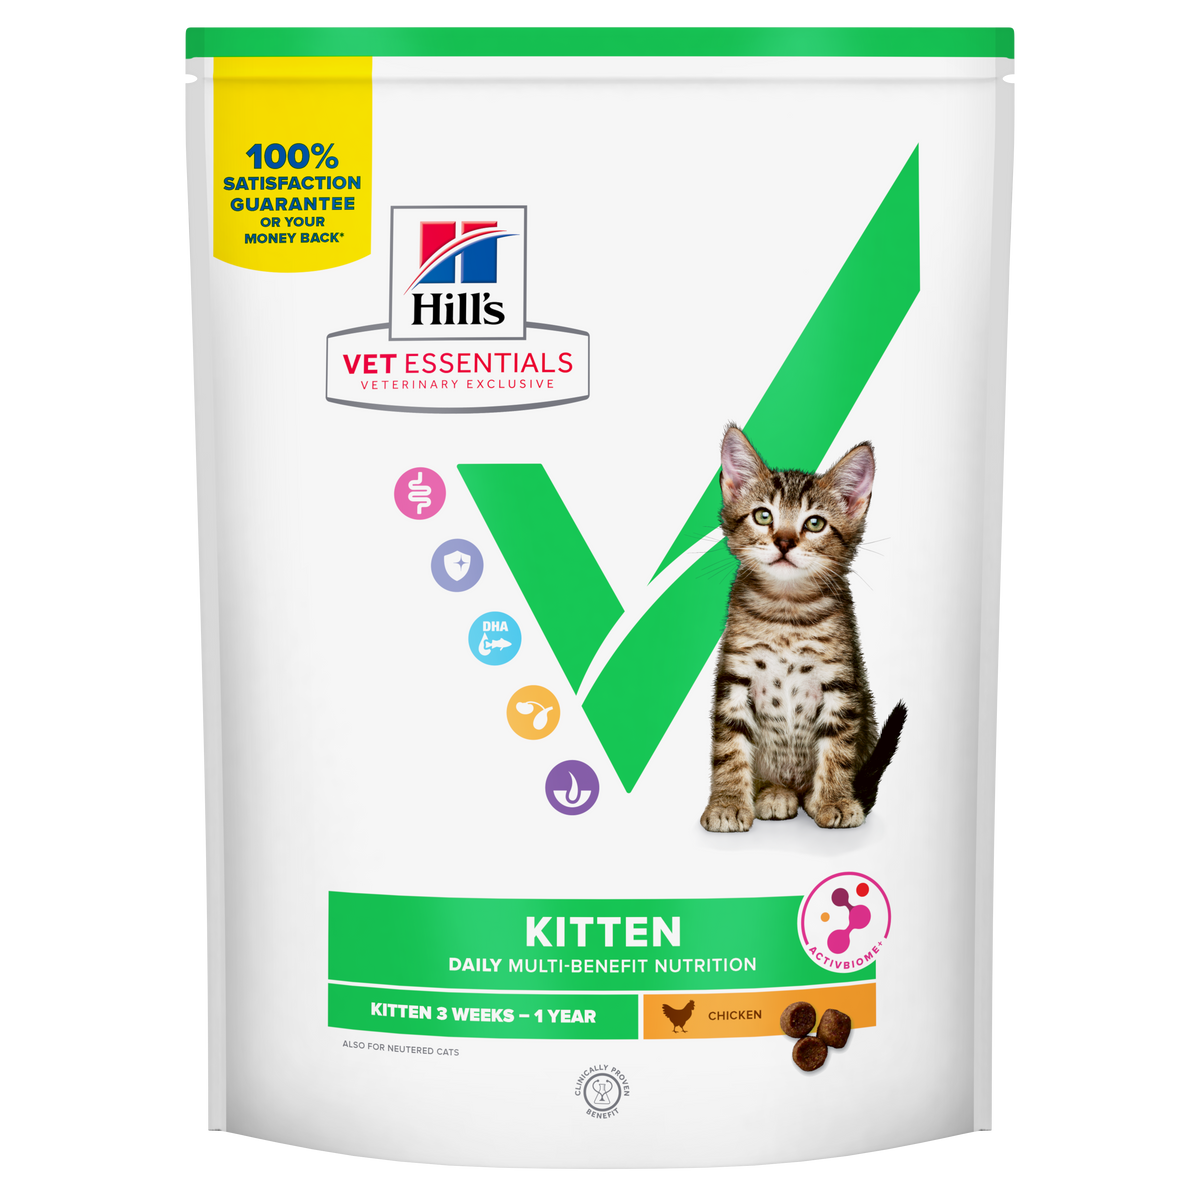 Hill's VET ESSENTIALS MULTI-BENEFIT Dry Kitten Food Chicken